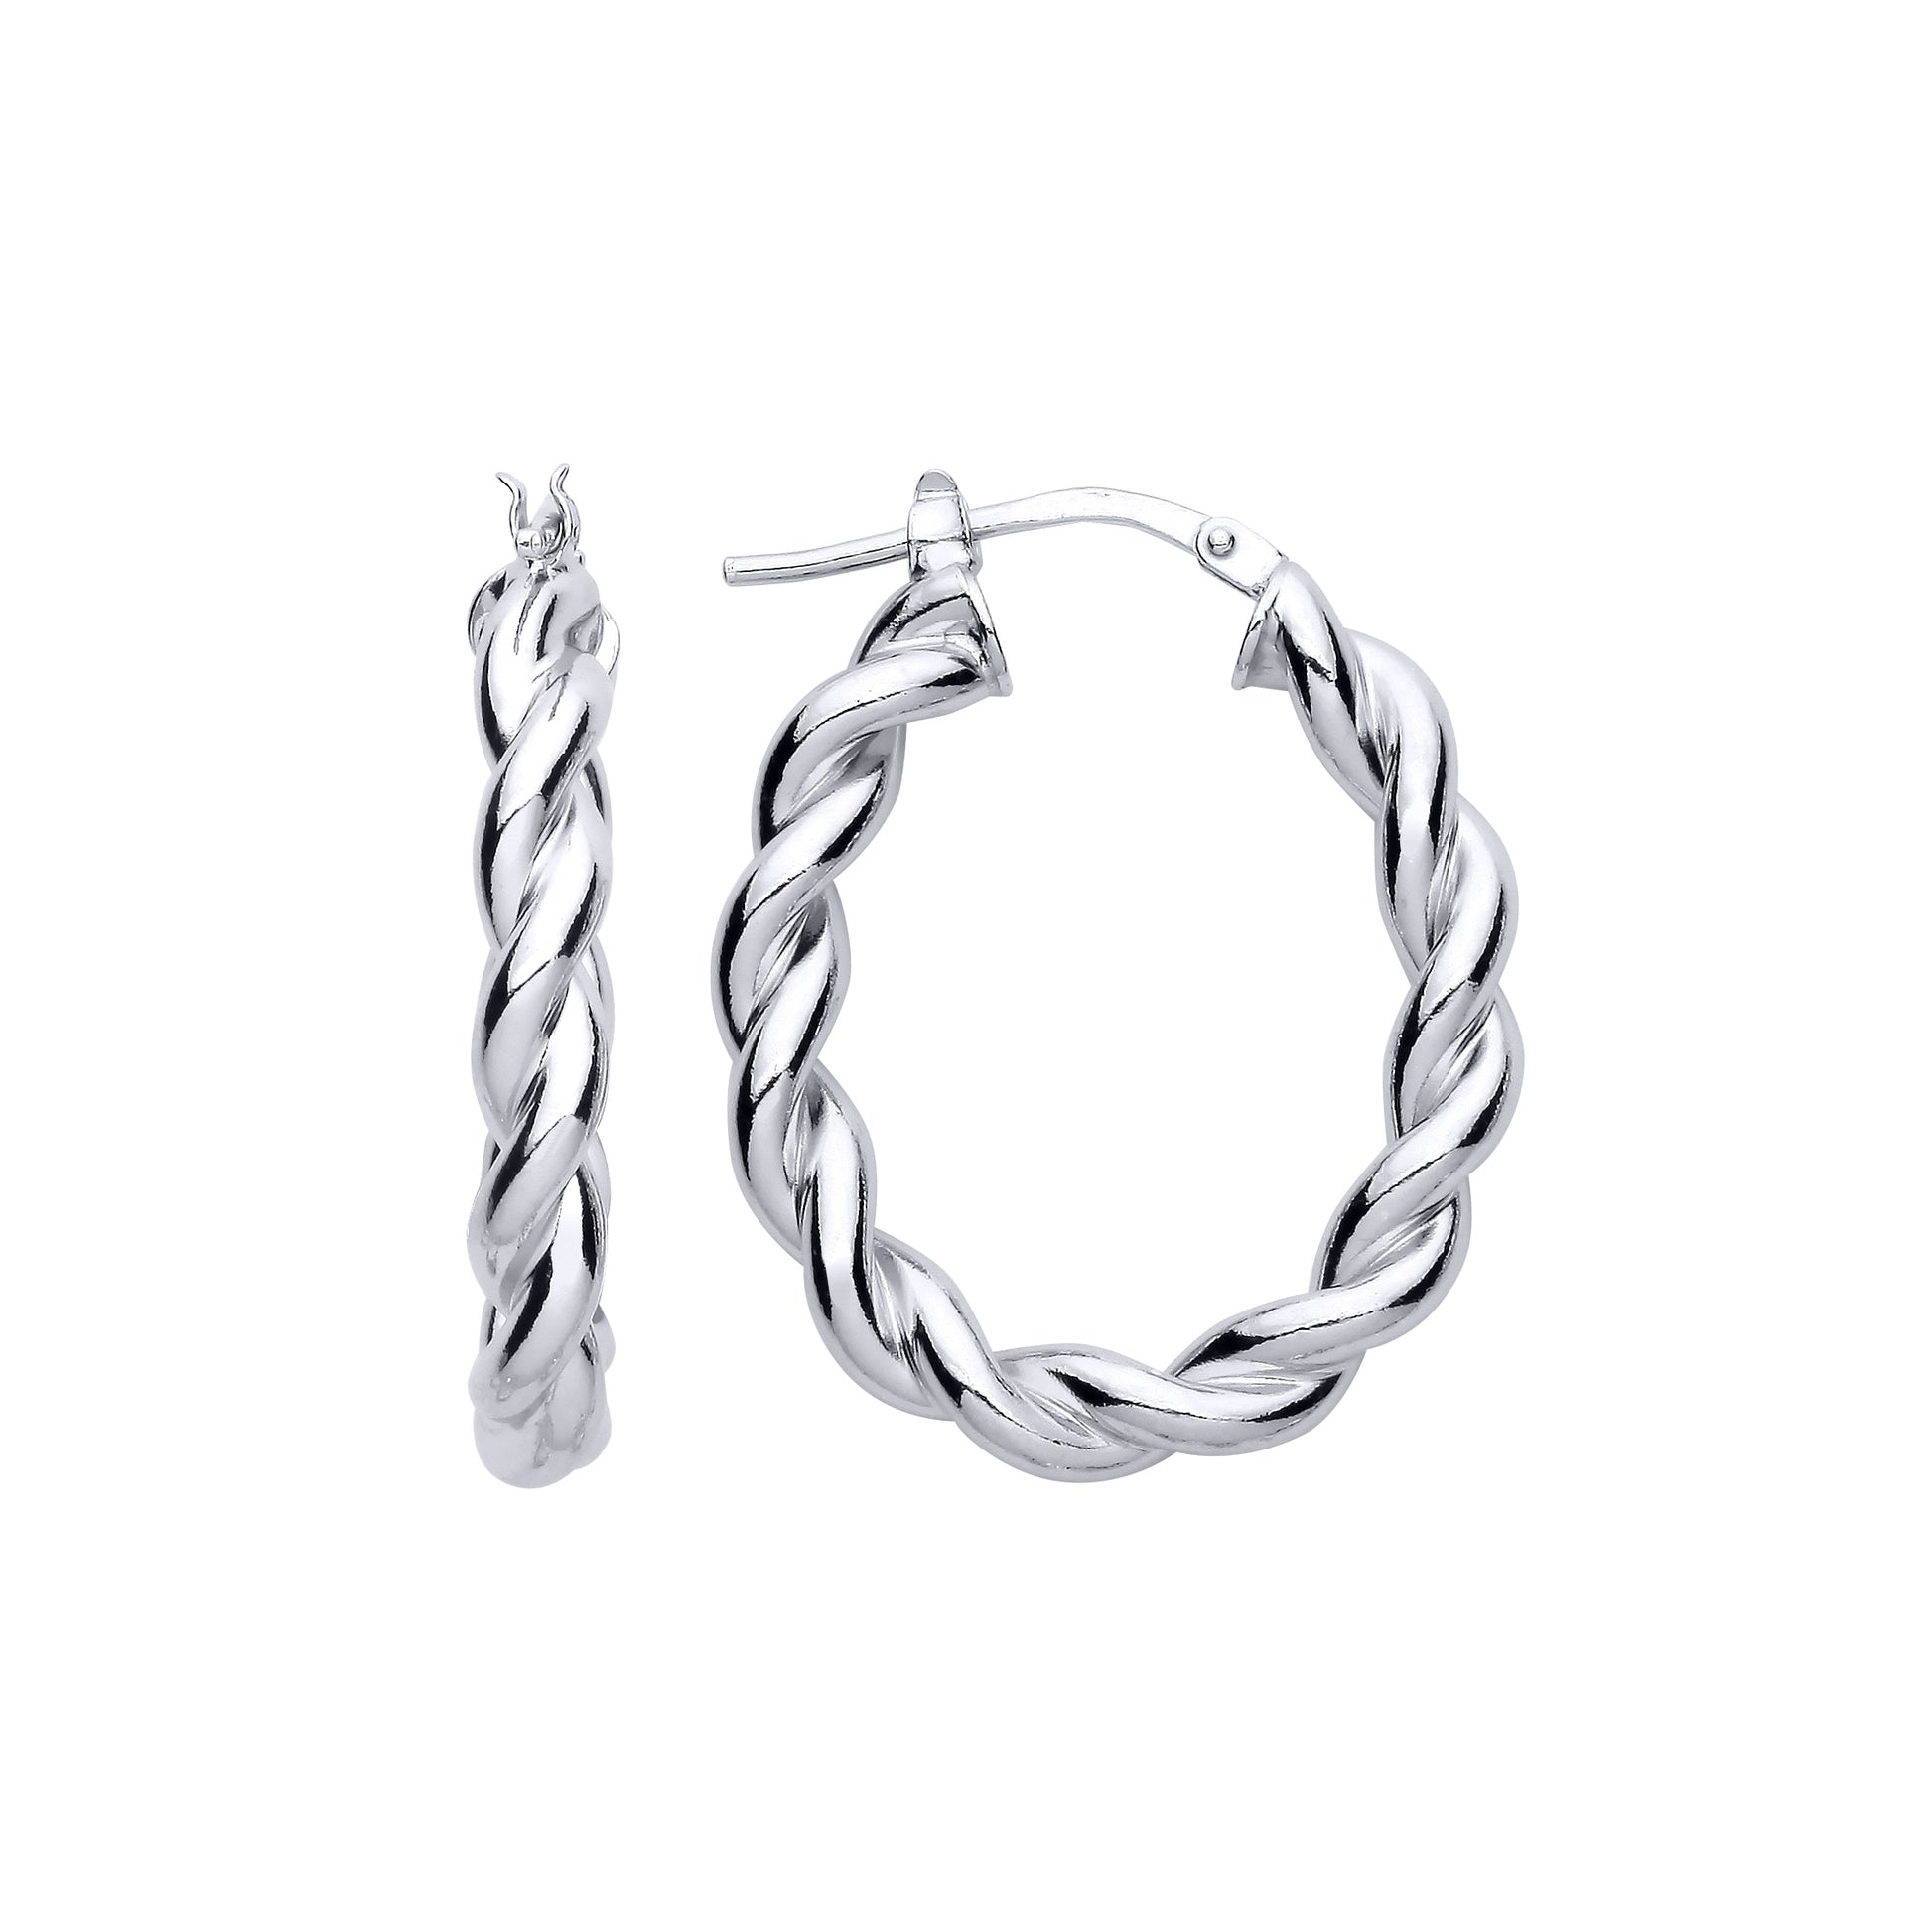 Silver  Plaited Chunky Twist Oval Hoop Earrings 24mm 4mm - ER146